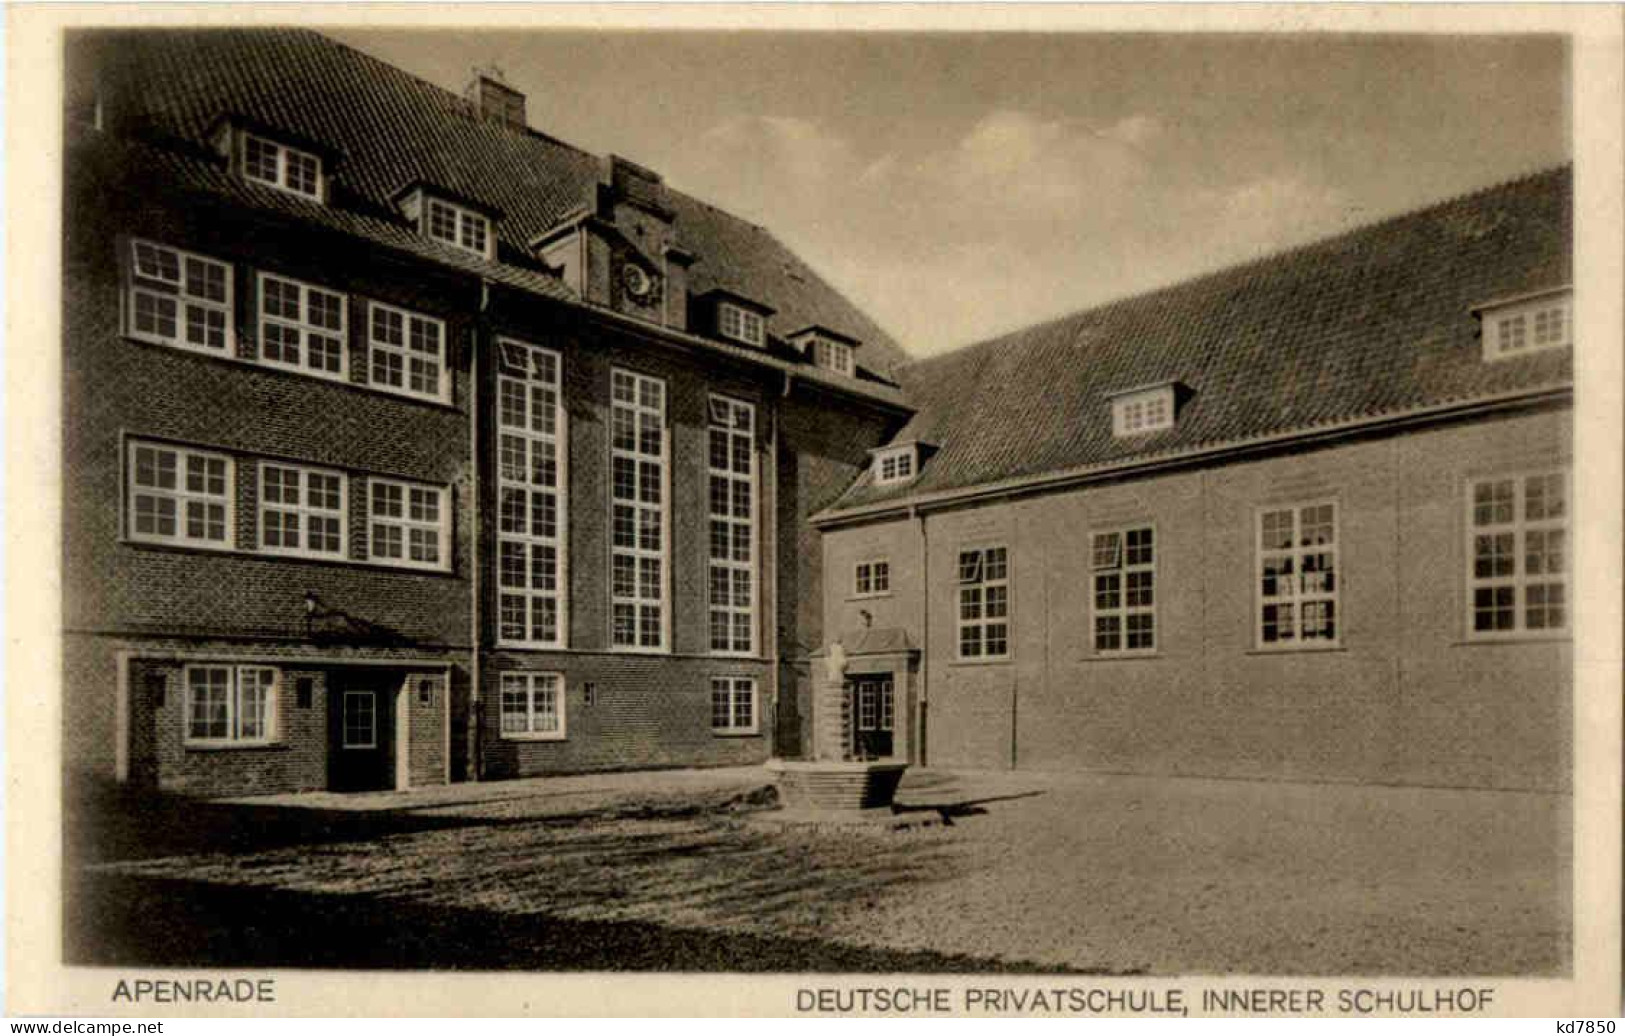 Apenrade - Deutsche Privatschule - Denmark